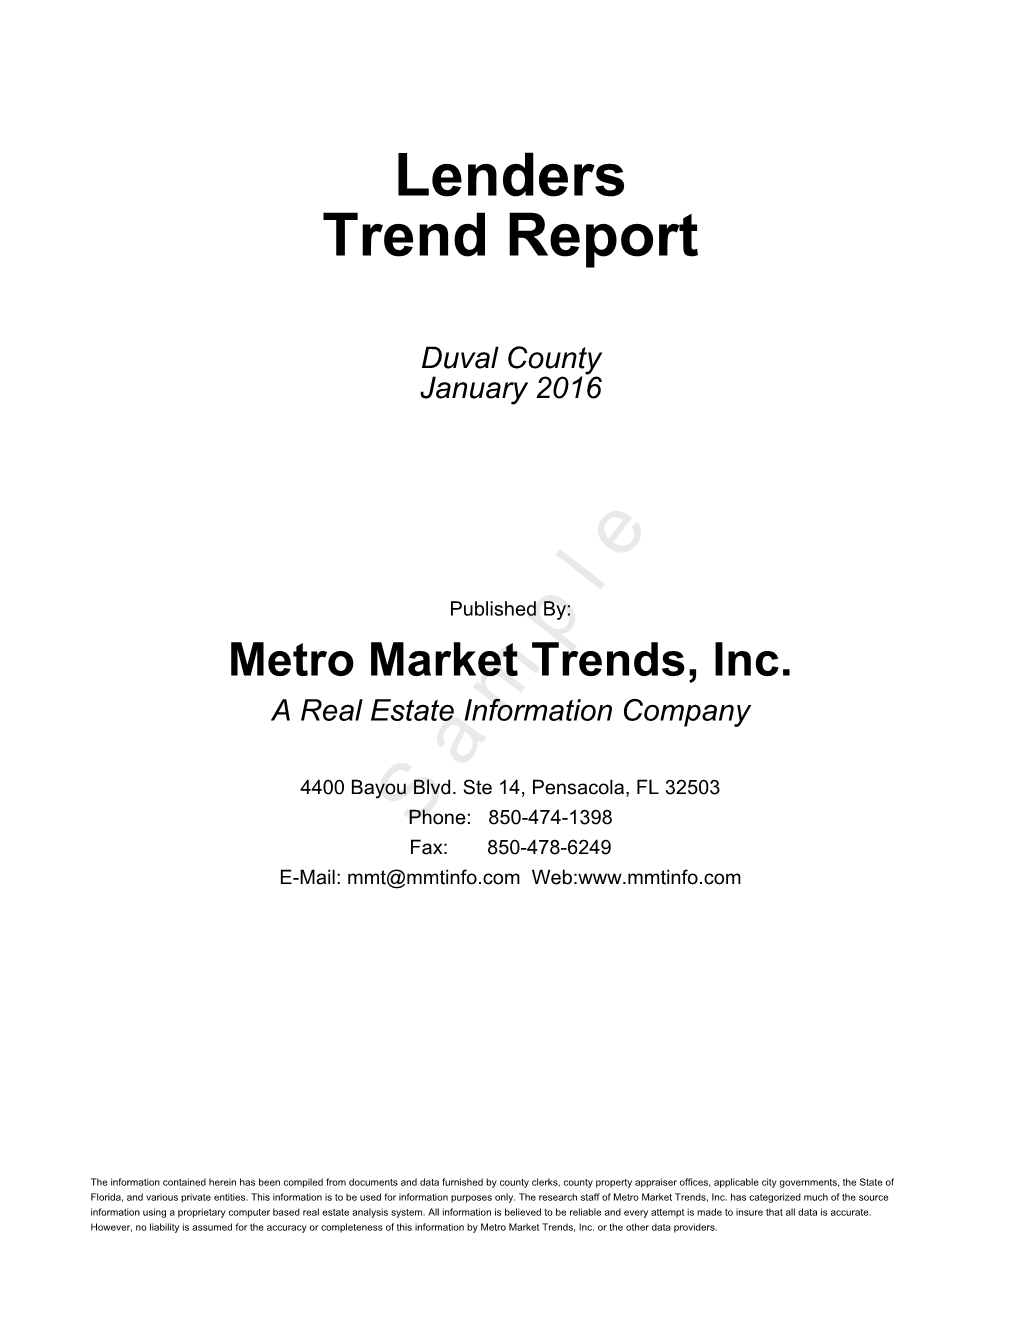 Lenders Trend Report